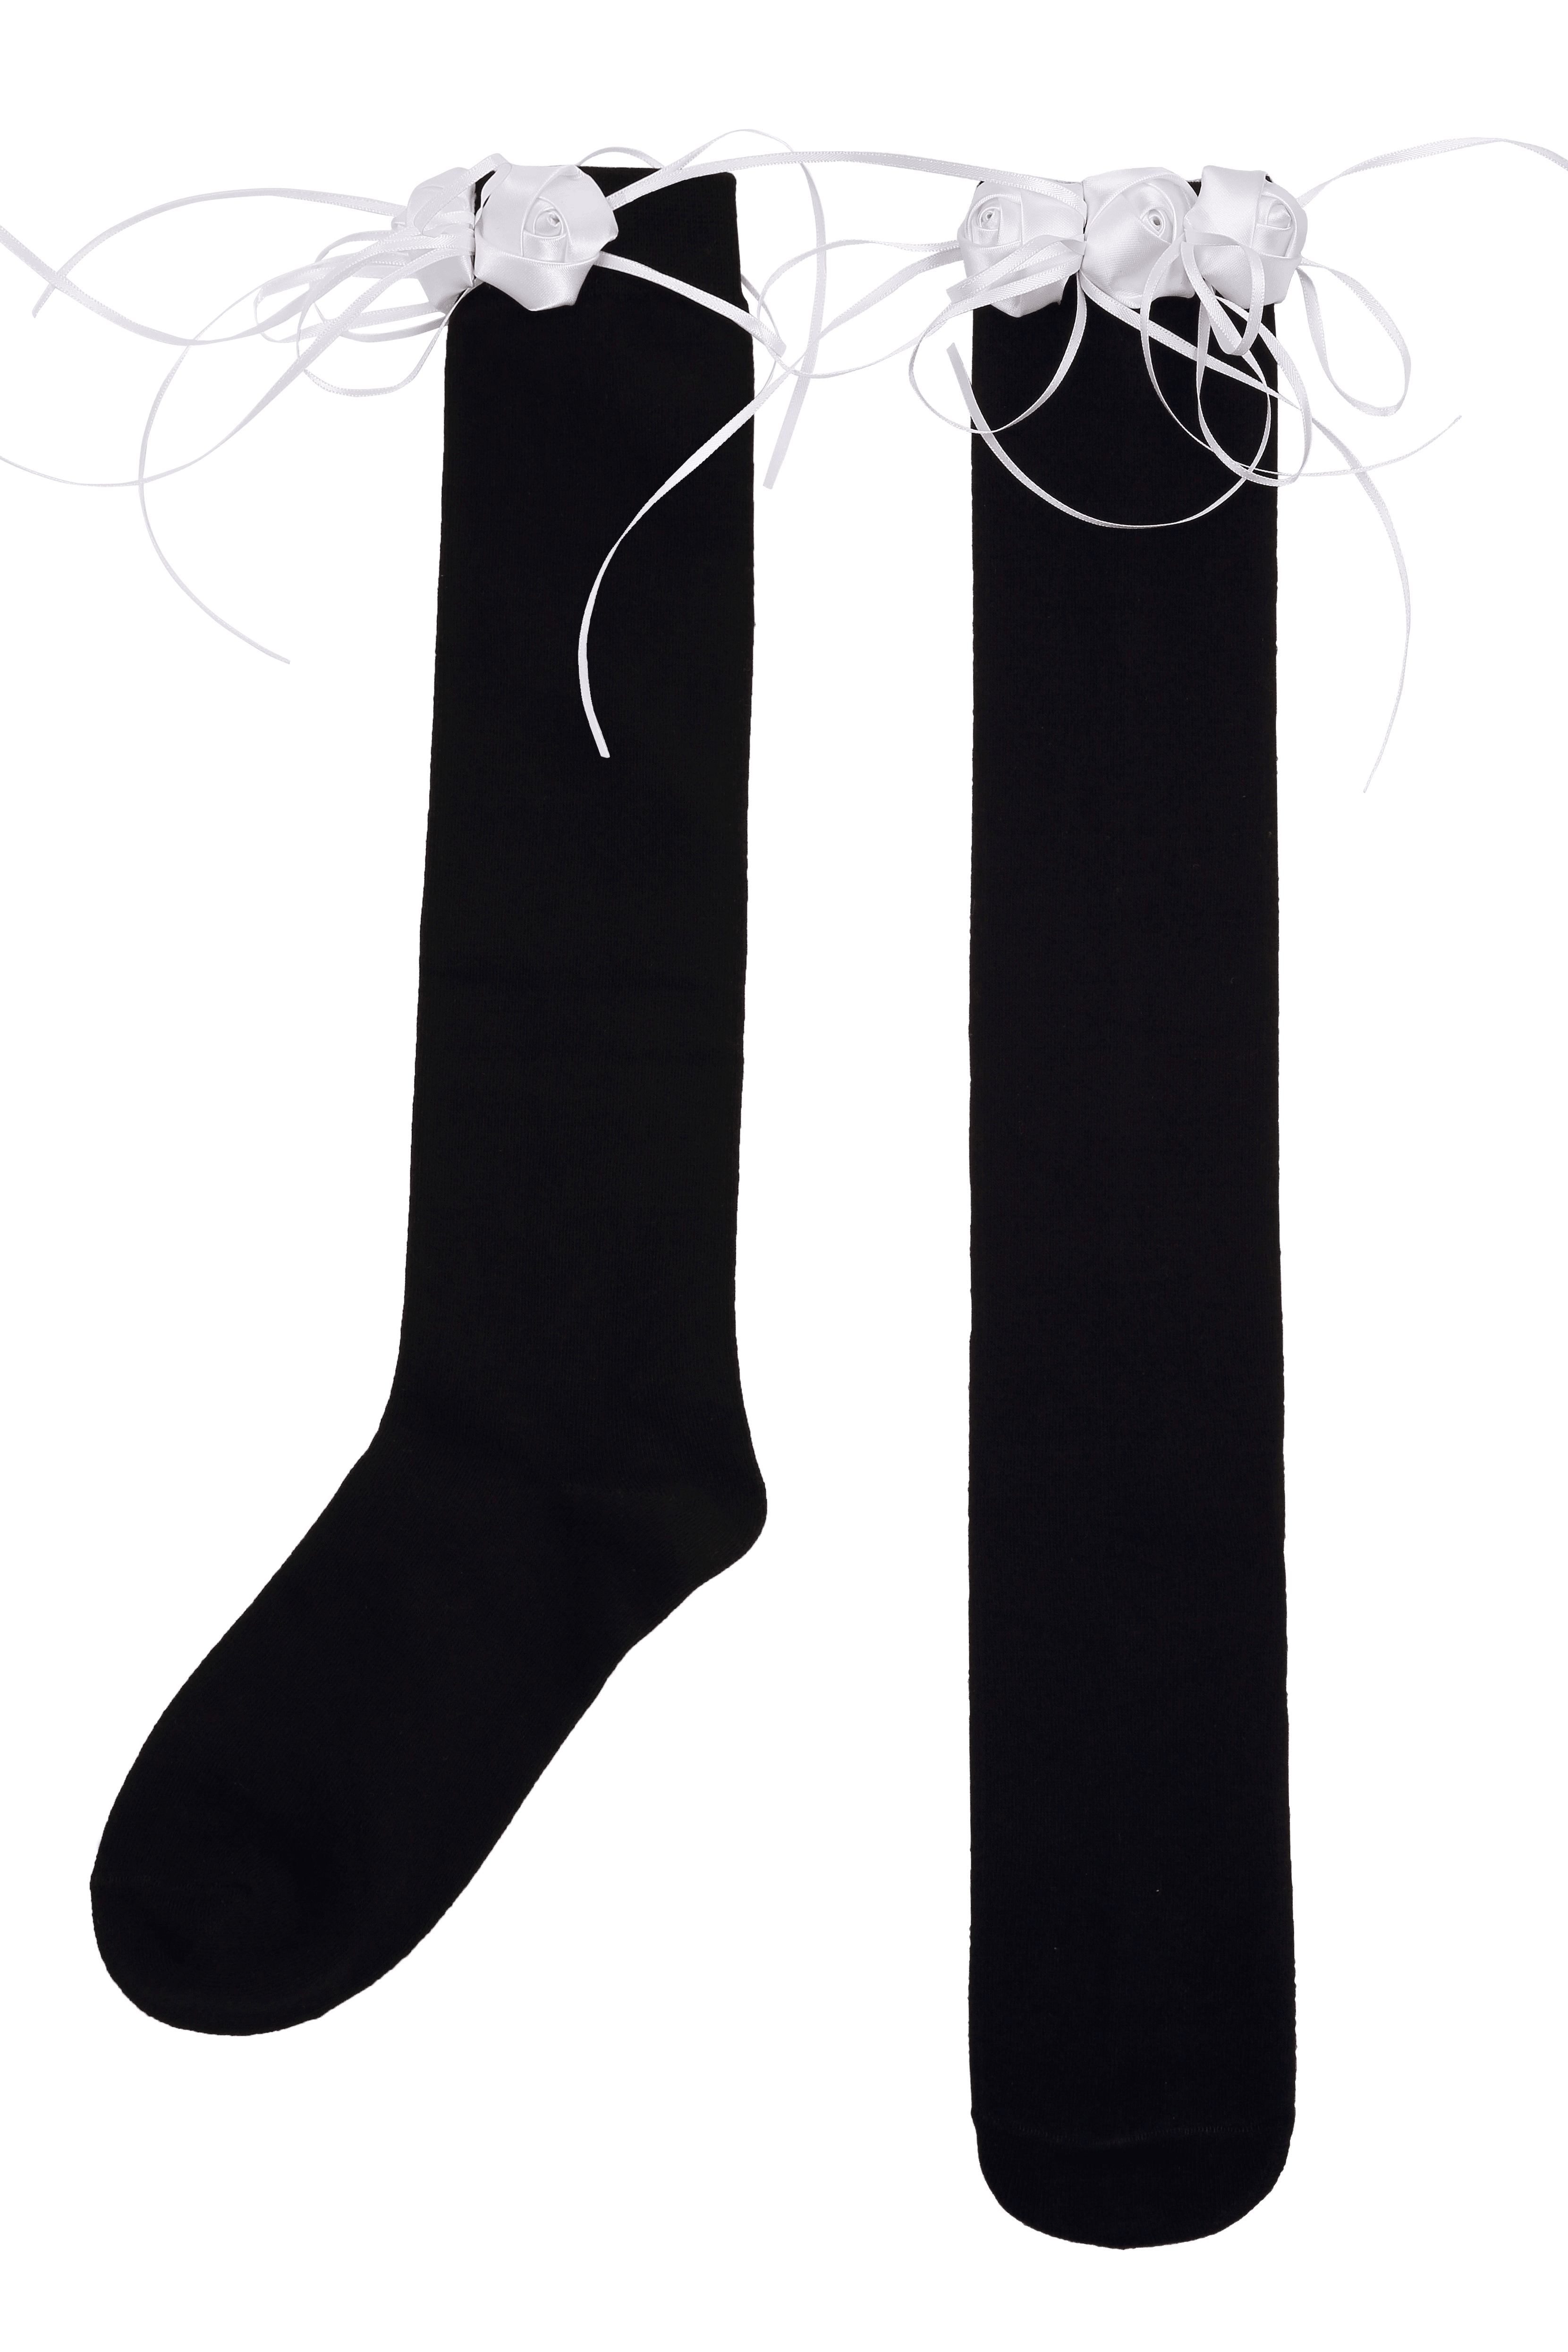 Handmade Flower Bud Black Cotton Long Socks - Uniqvibe